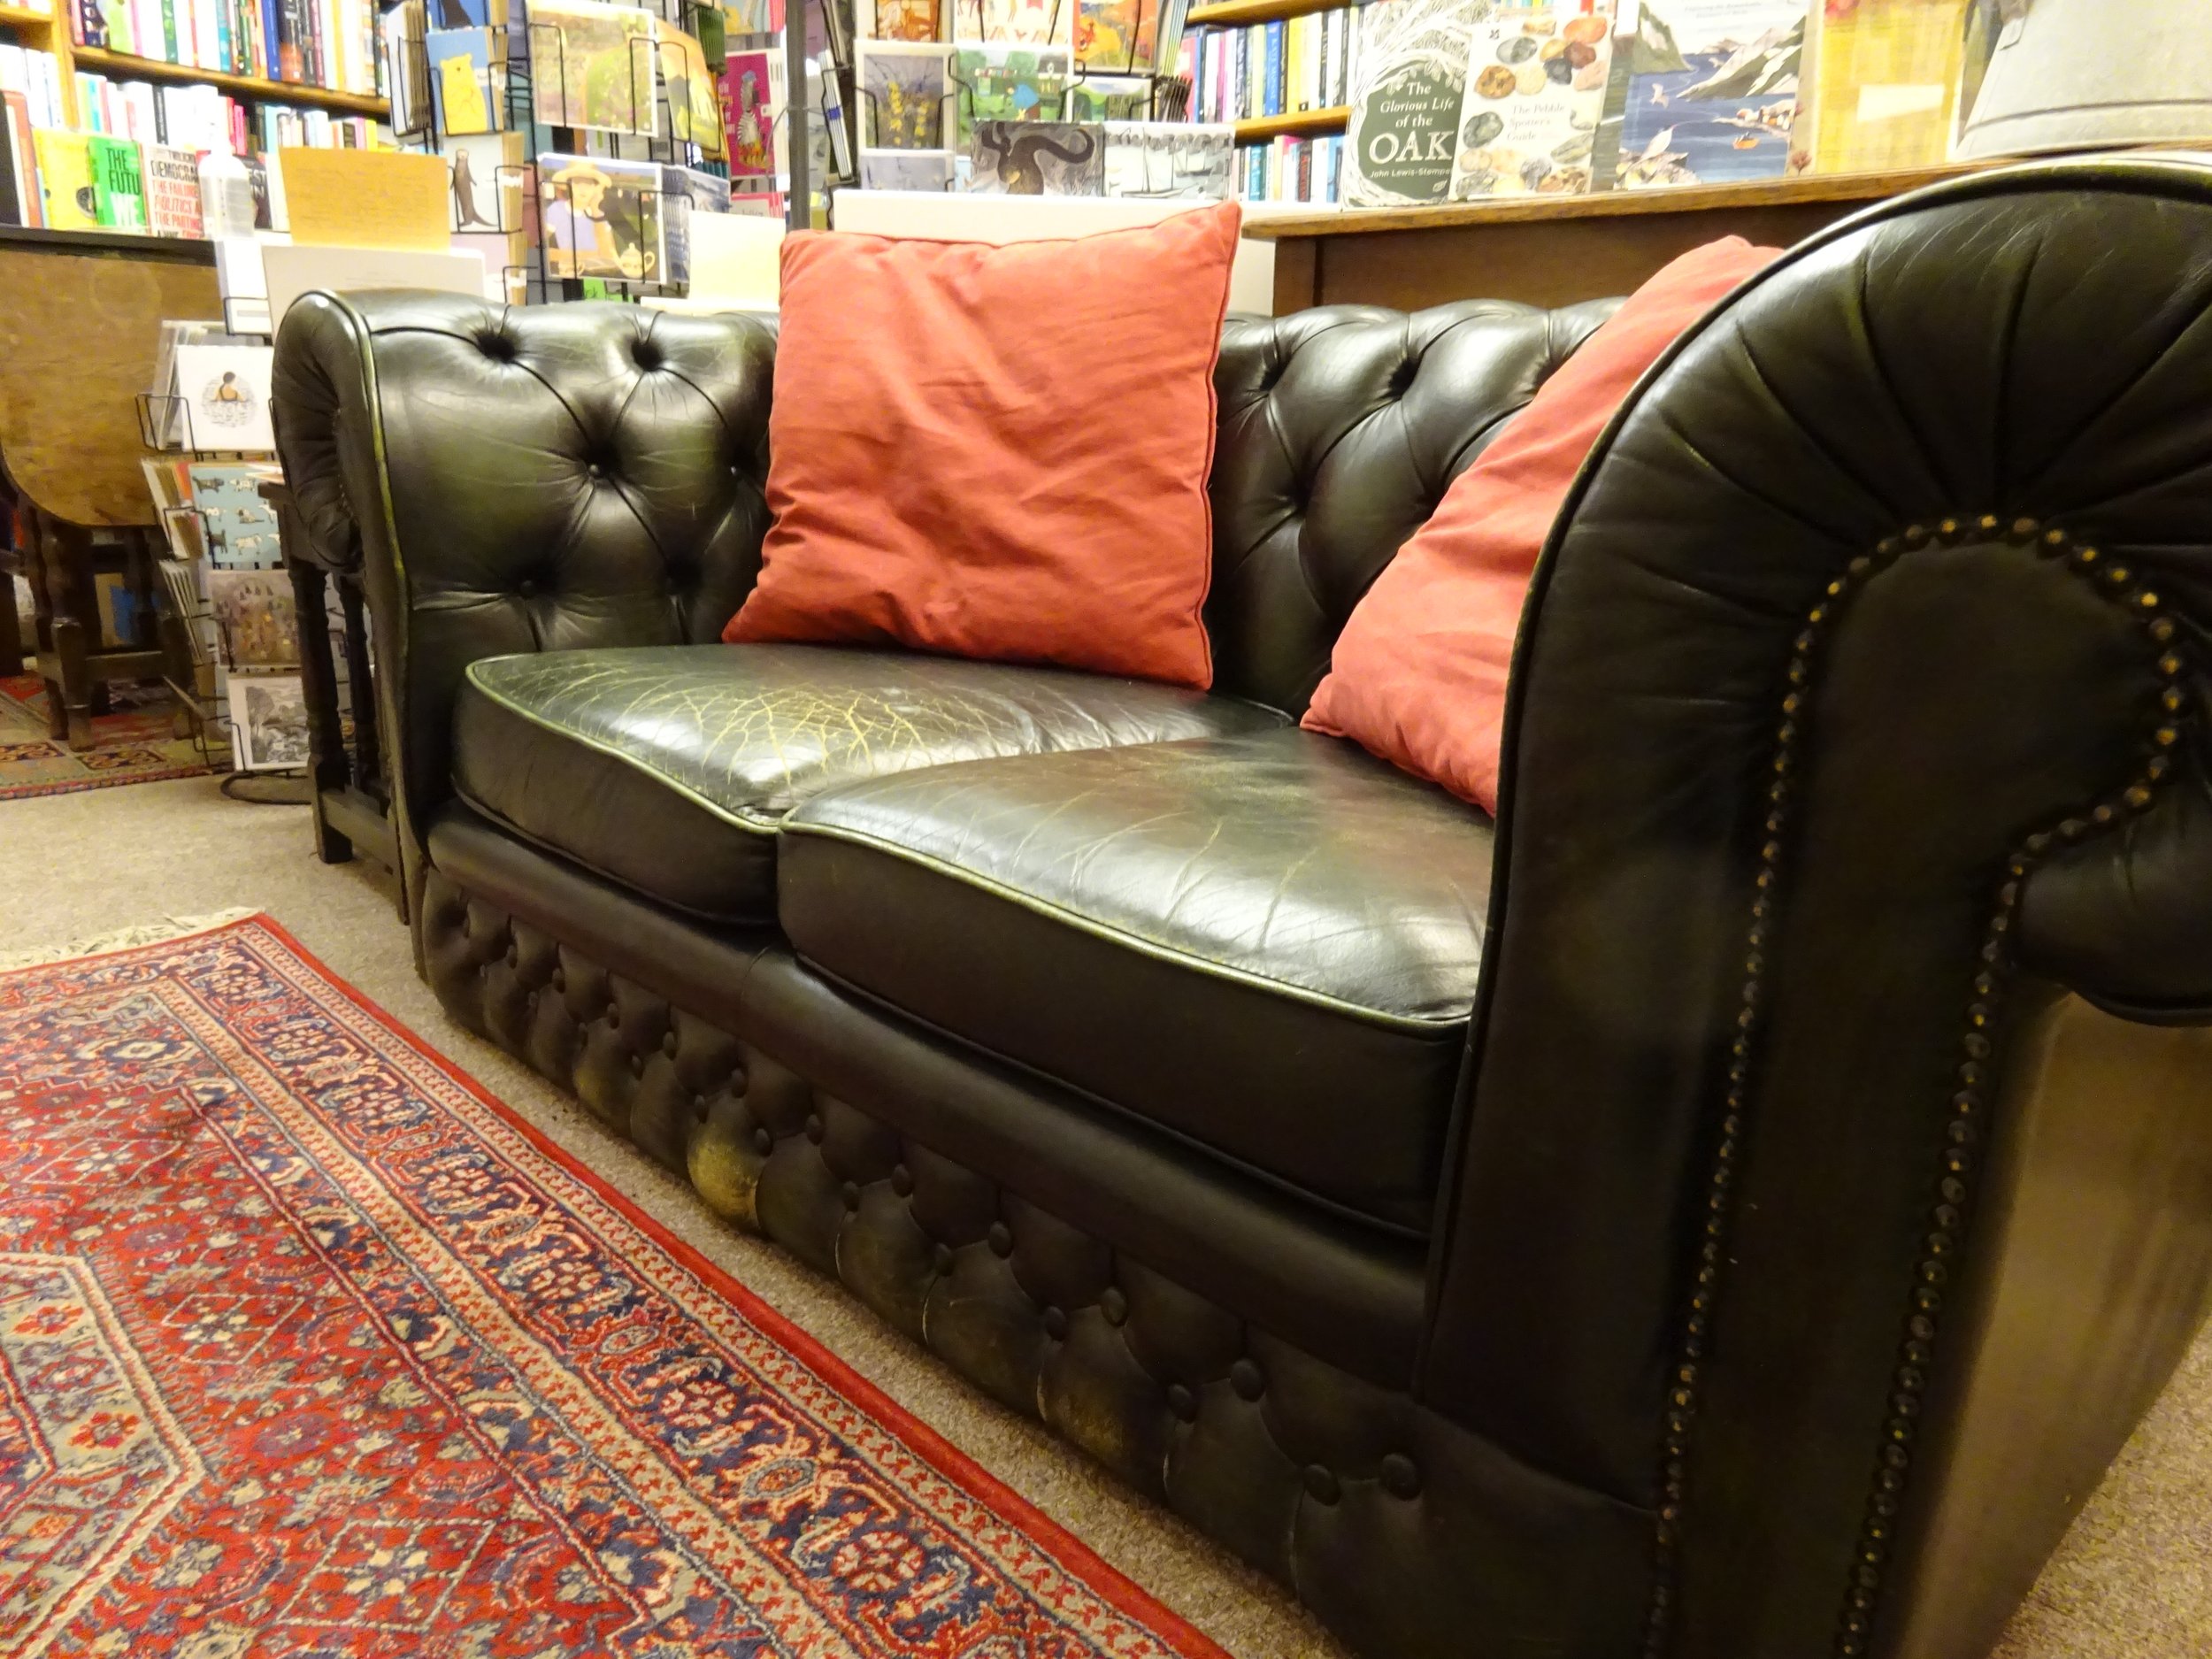 The shop sofa